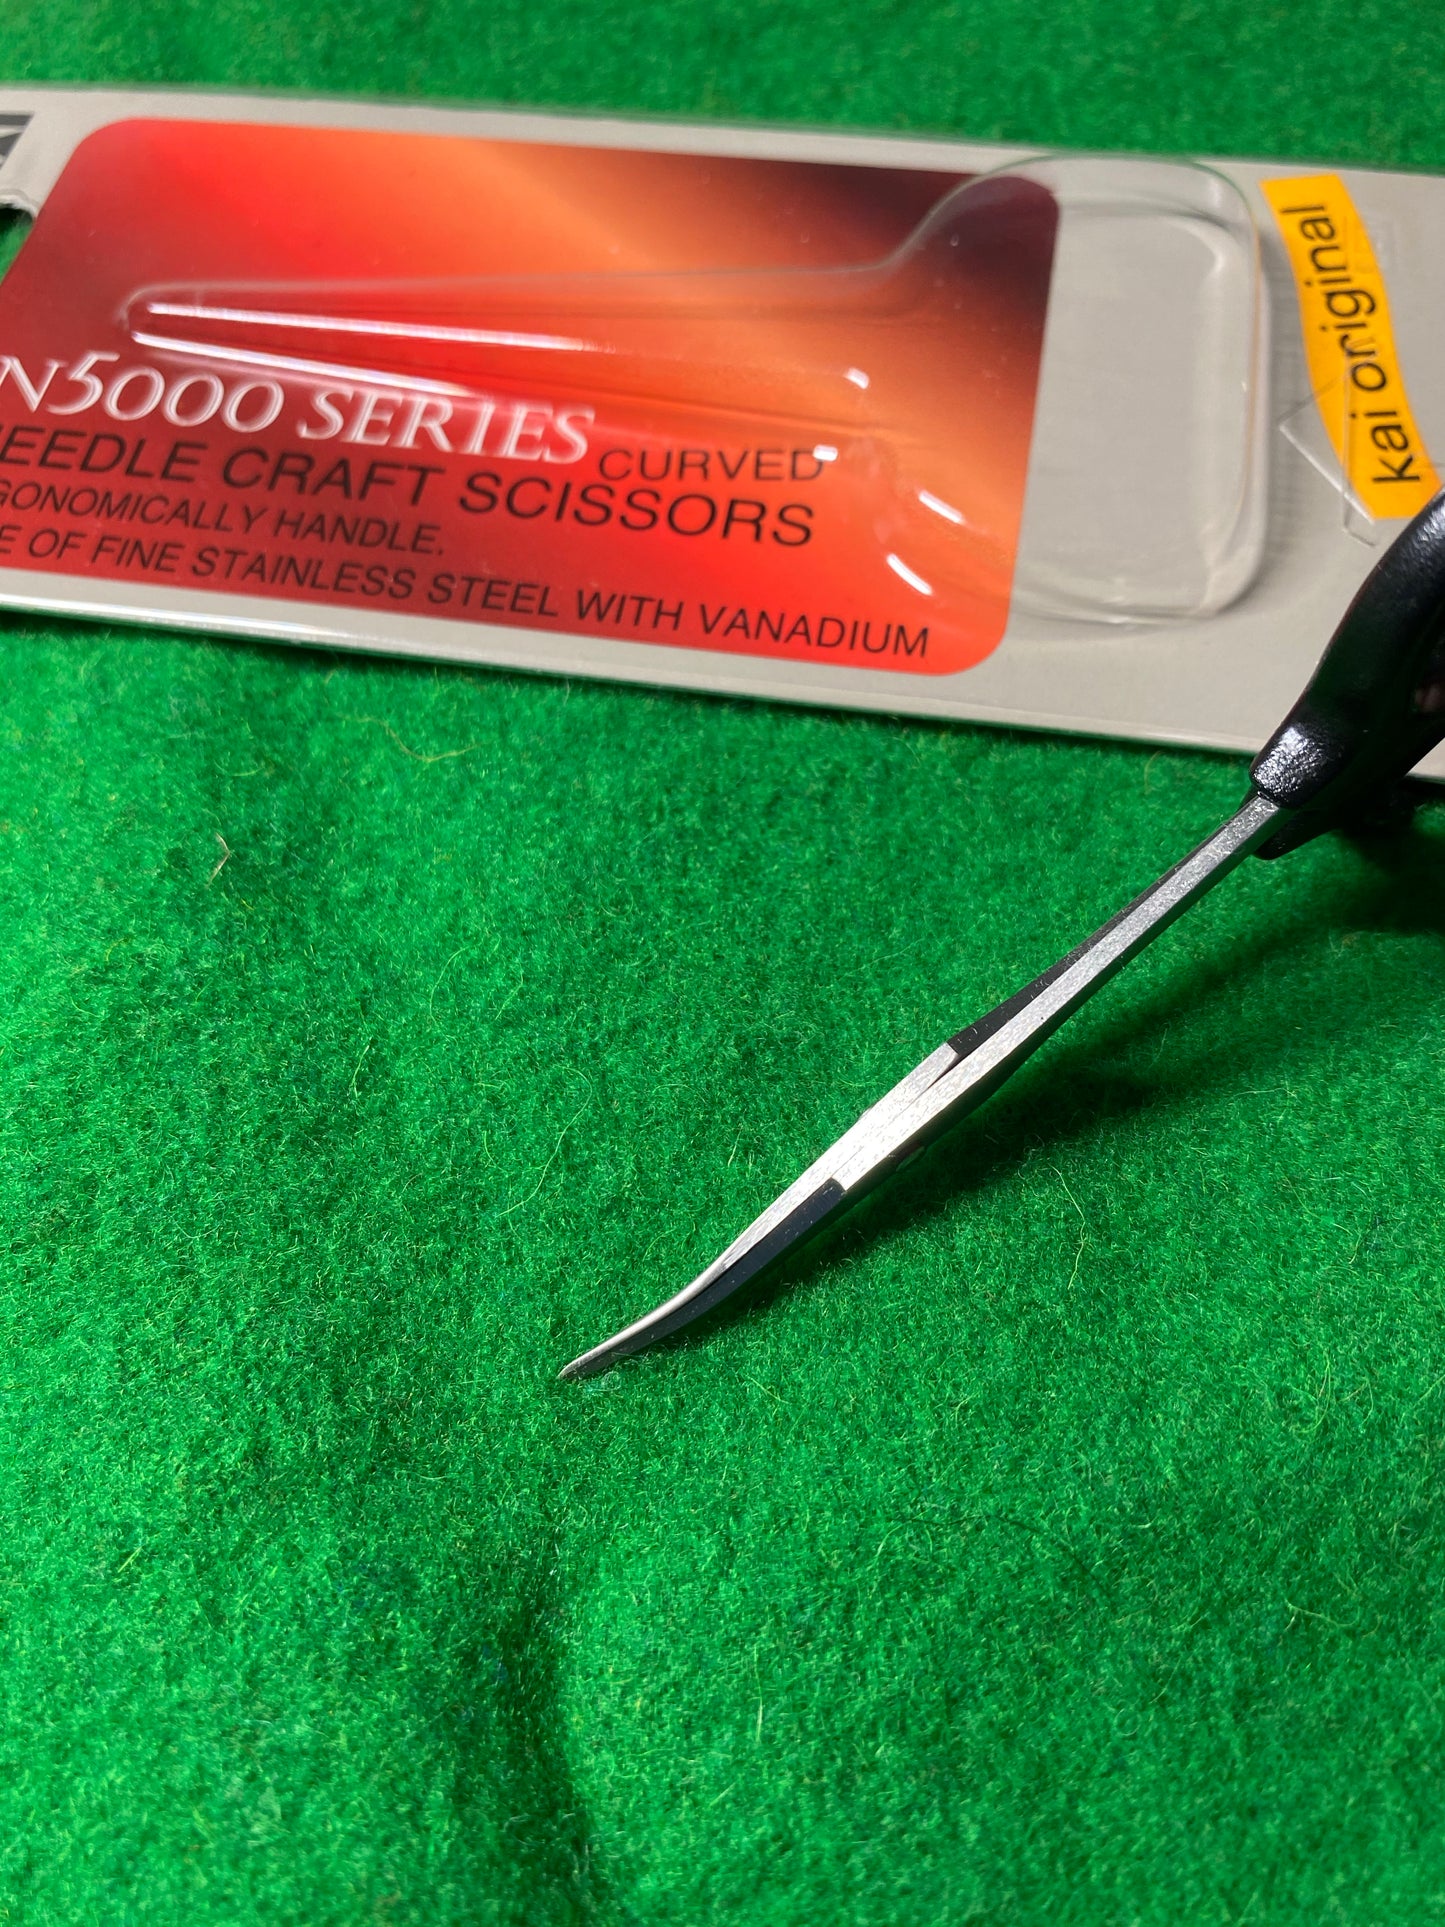 Kai 4 in. Needle Crafts Curved Scissors